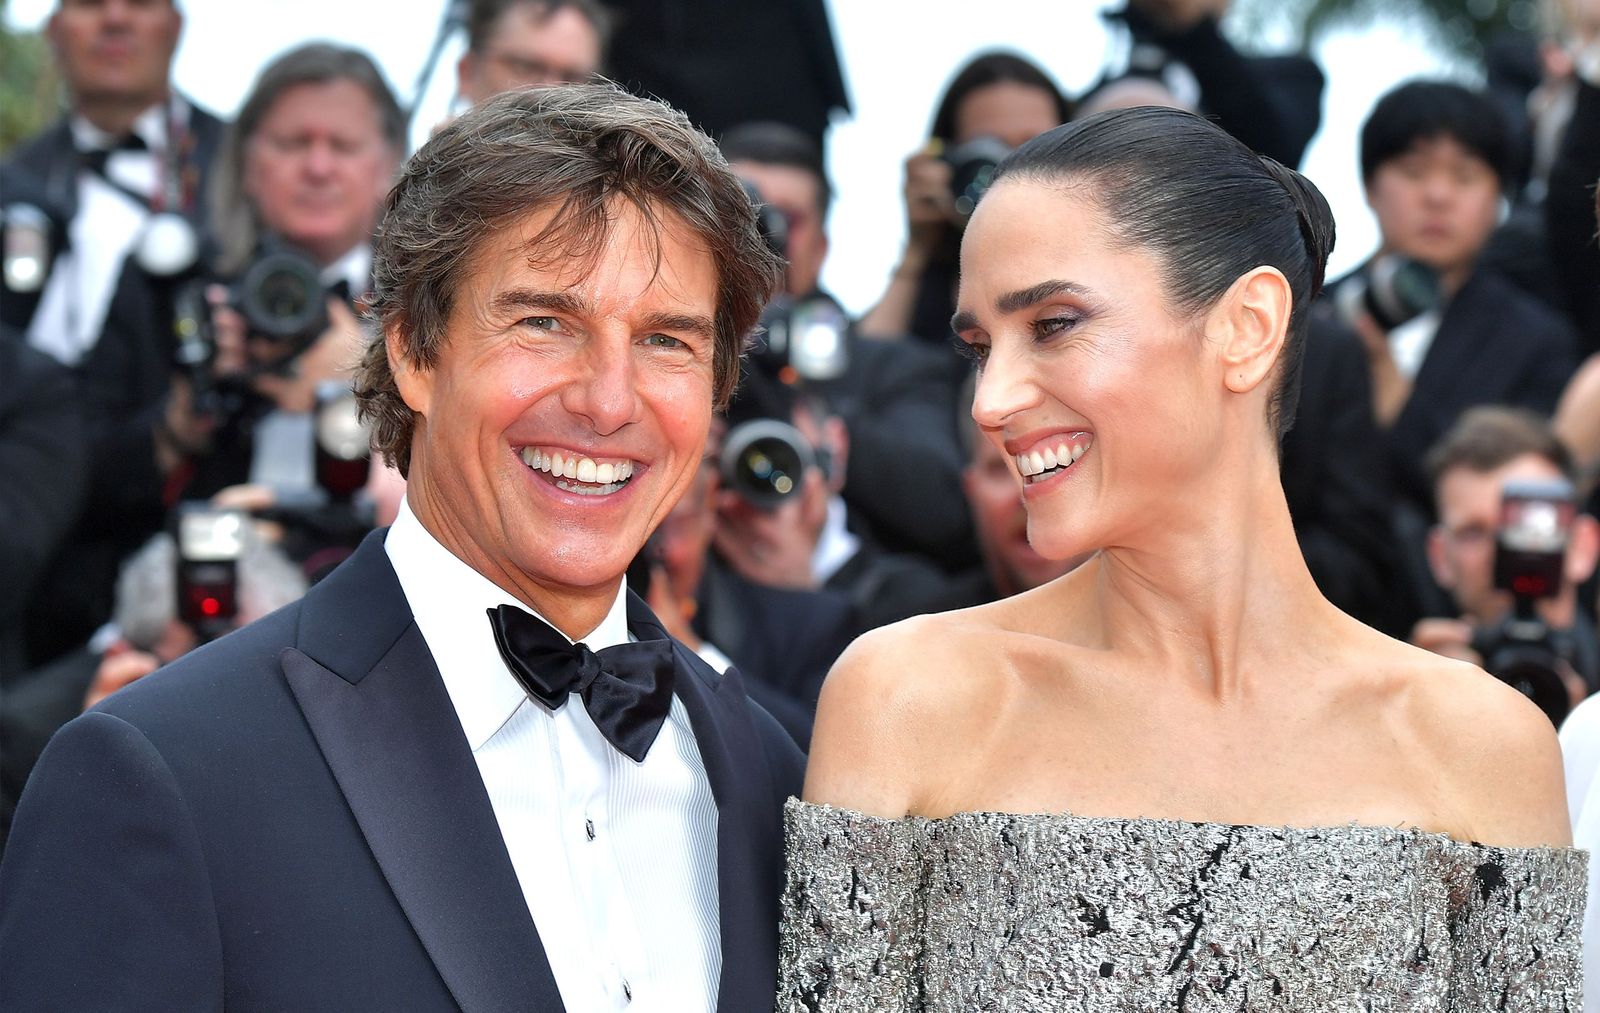 Tom Cruise & Jennifer Connelly - Red carpet entrance of Top Gun: Maverick -  Festival de Cannes